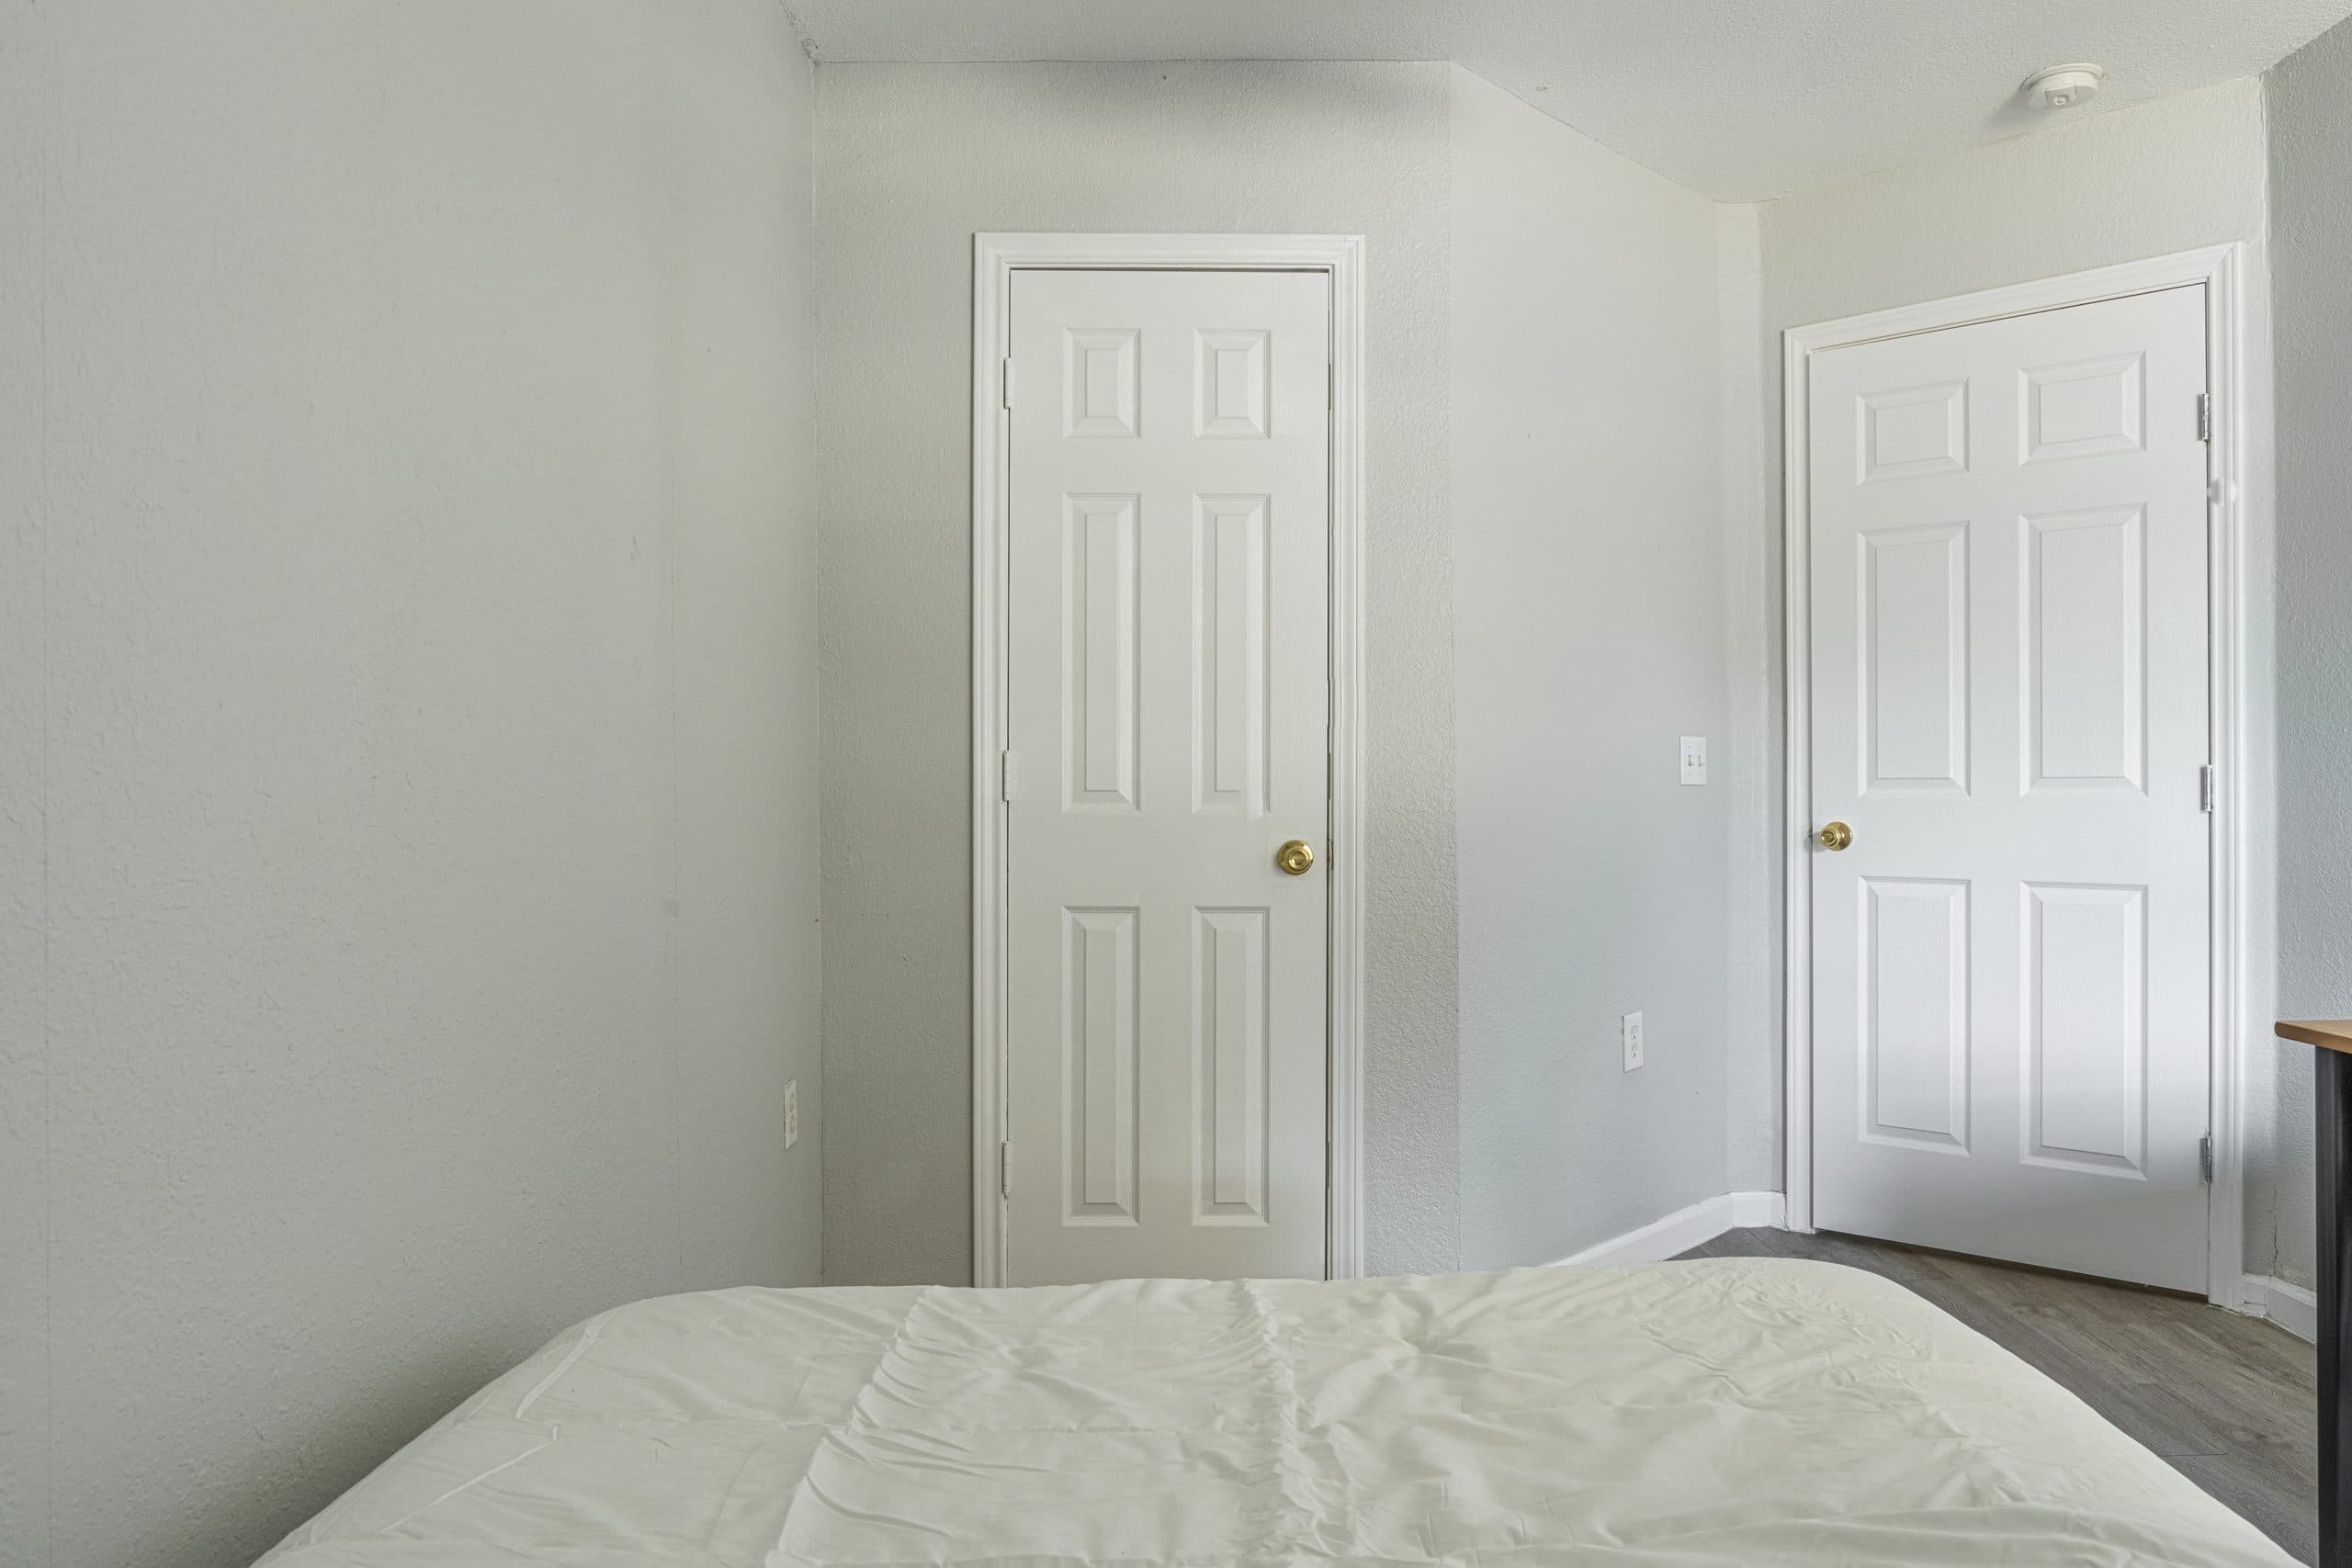 Photo 15 of #4076: Full Bedroom B at June Homes